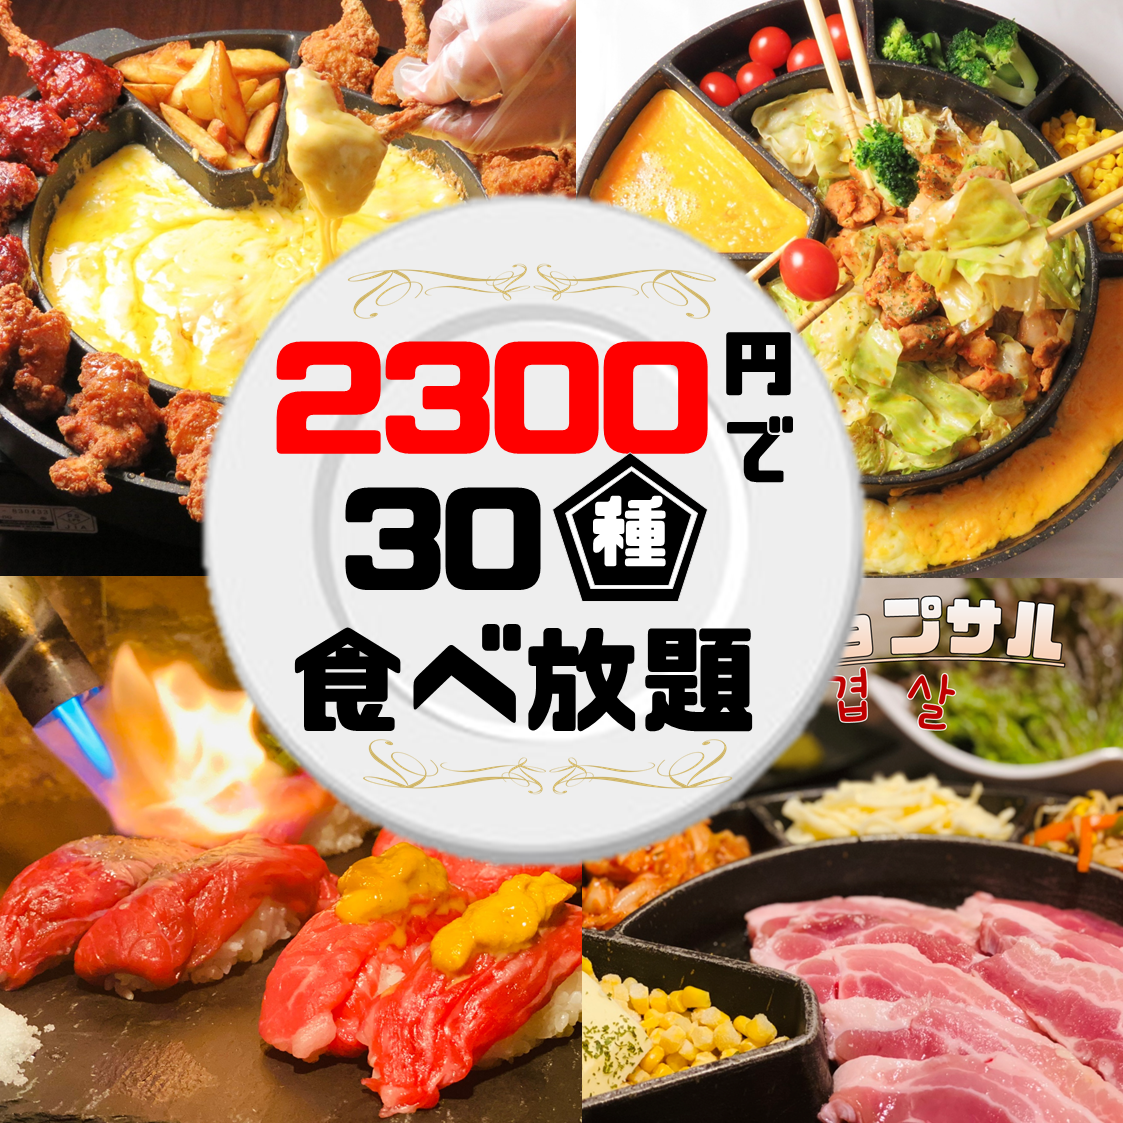 2H all-you-can-drink + choa chicken + snacks 1 item 3500 yen ⇒ 2300 yen